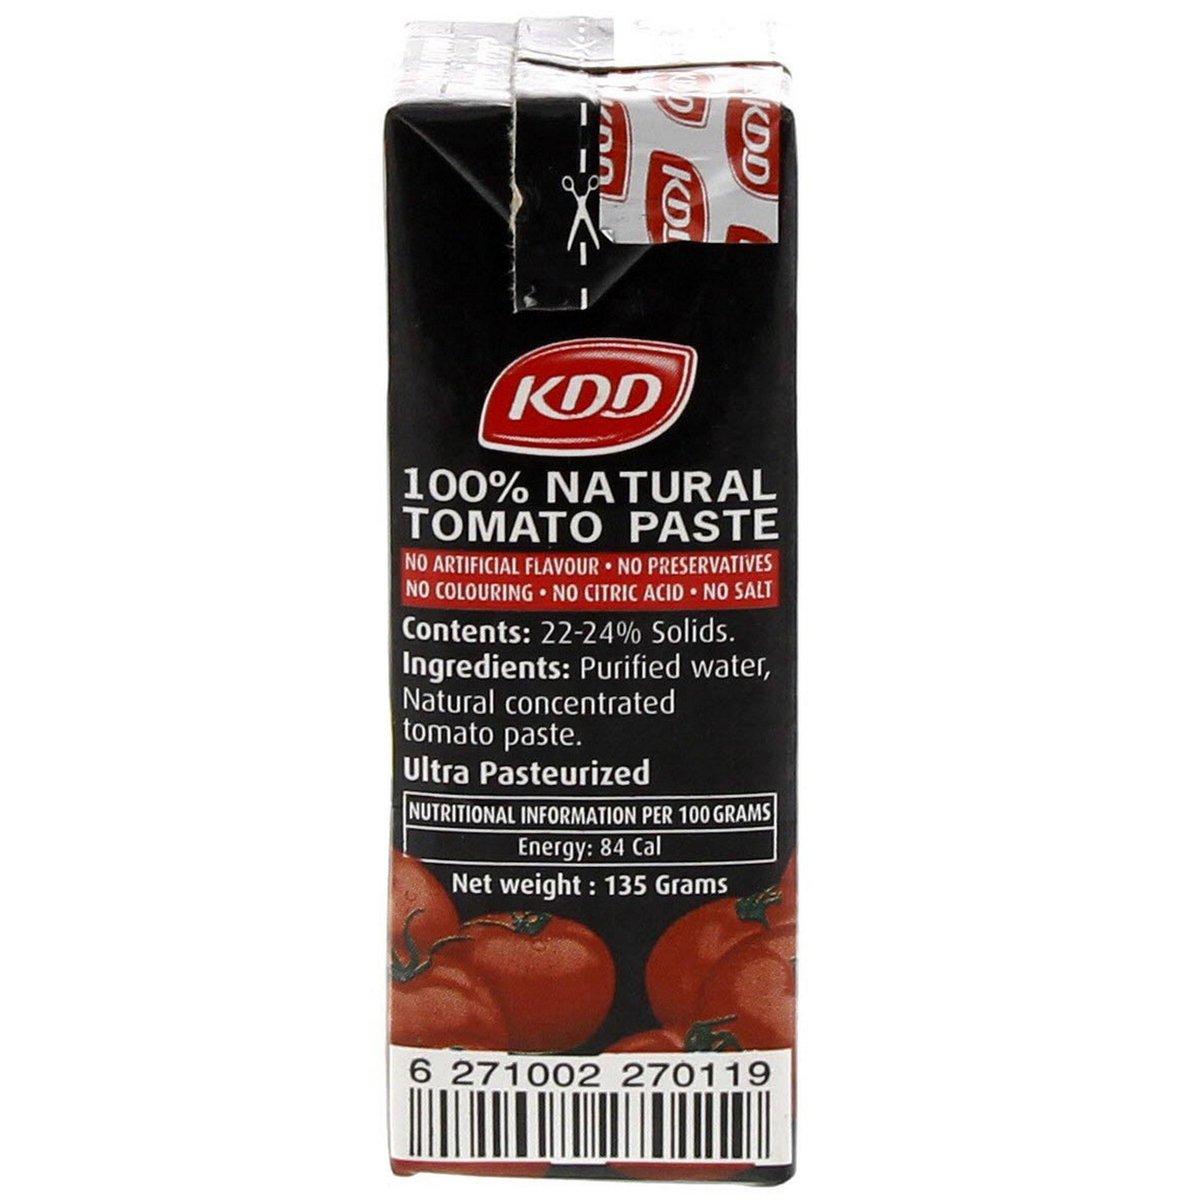 KDD Tomato Paste 135 g